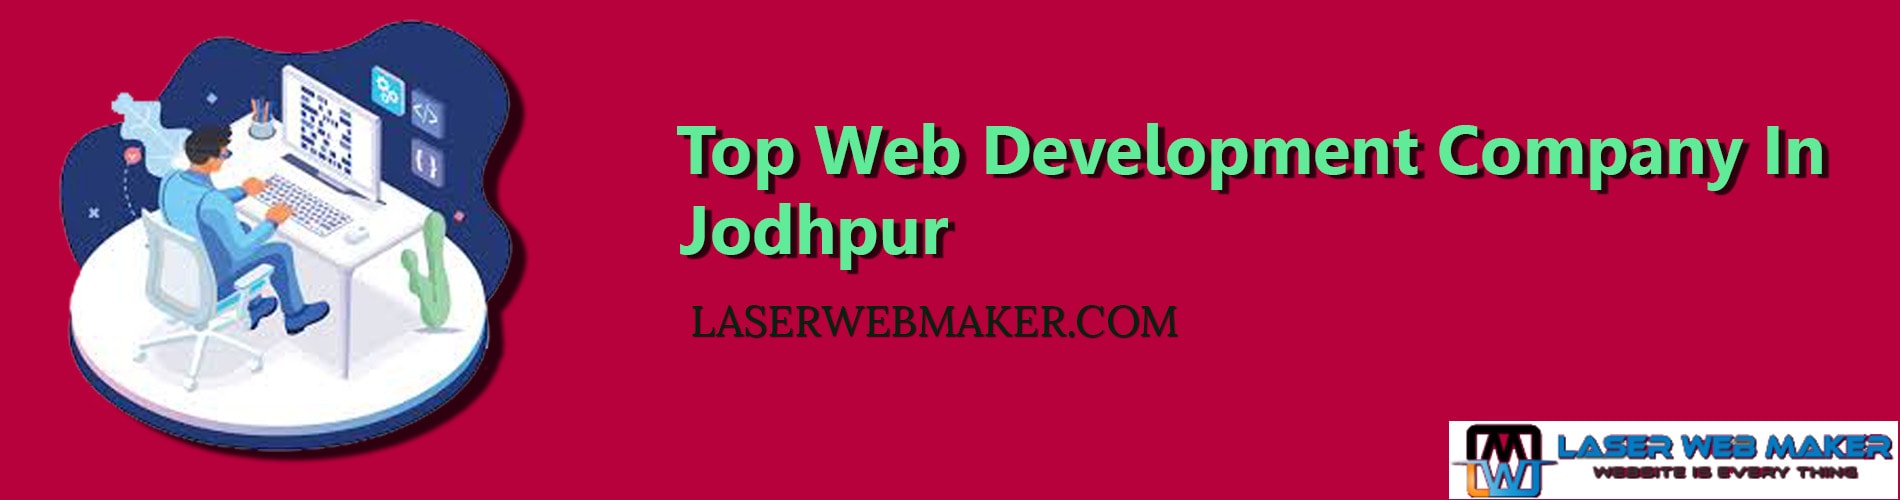 Top Web Development Company In Jodhpur, Rajasthan